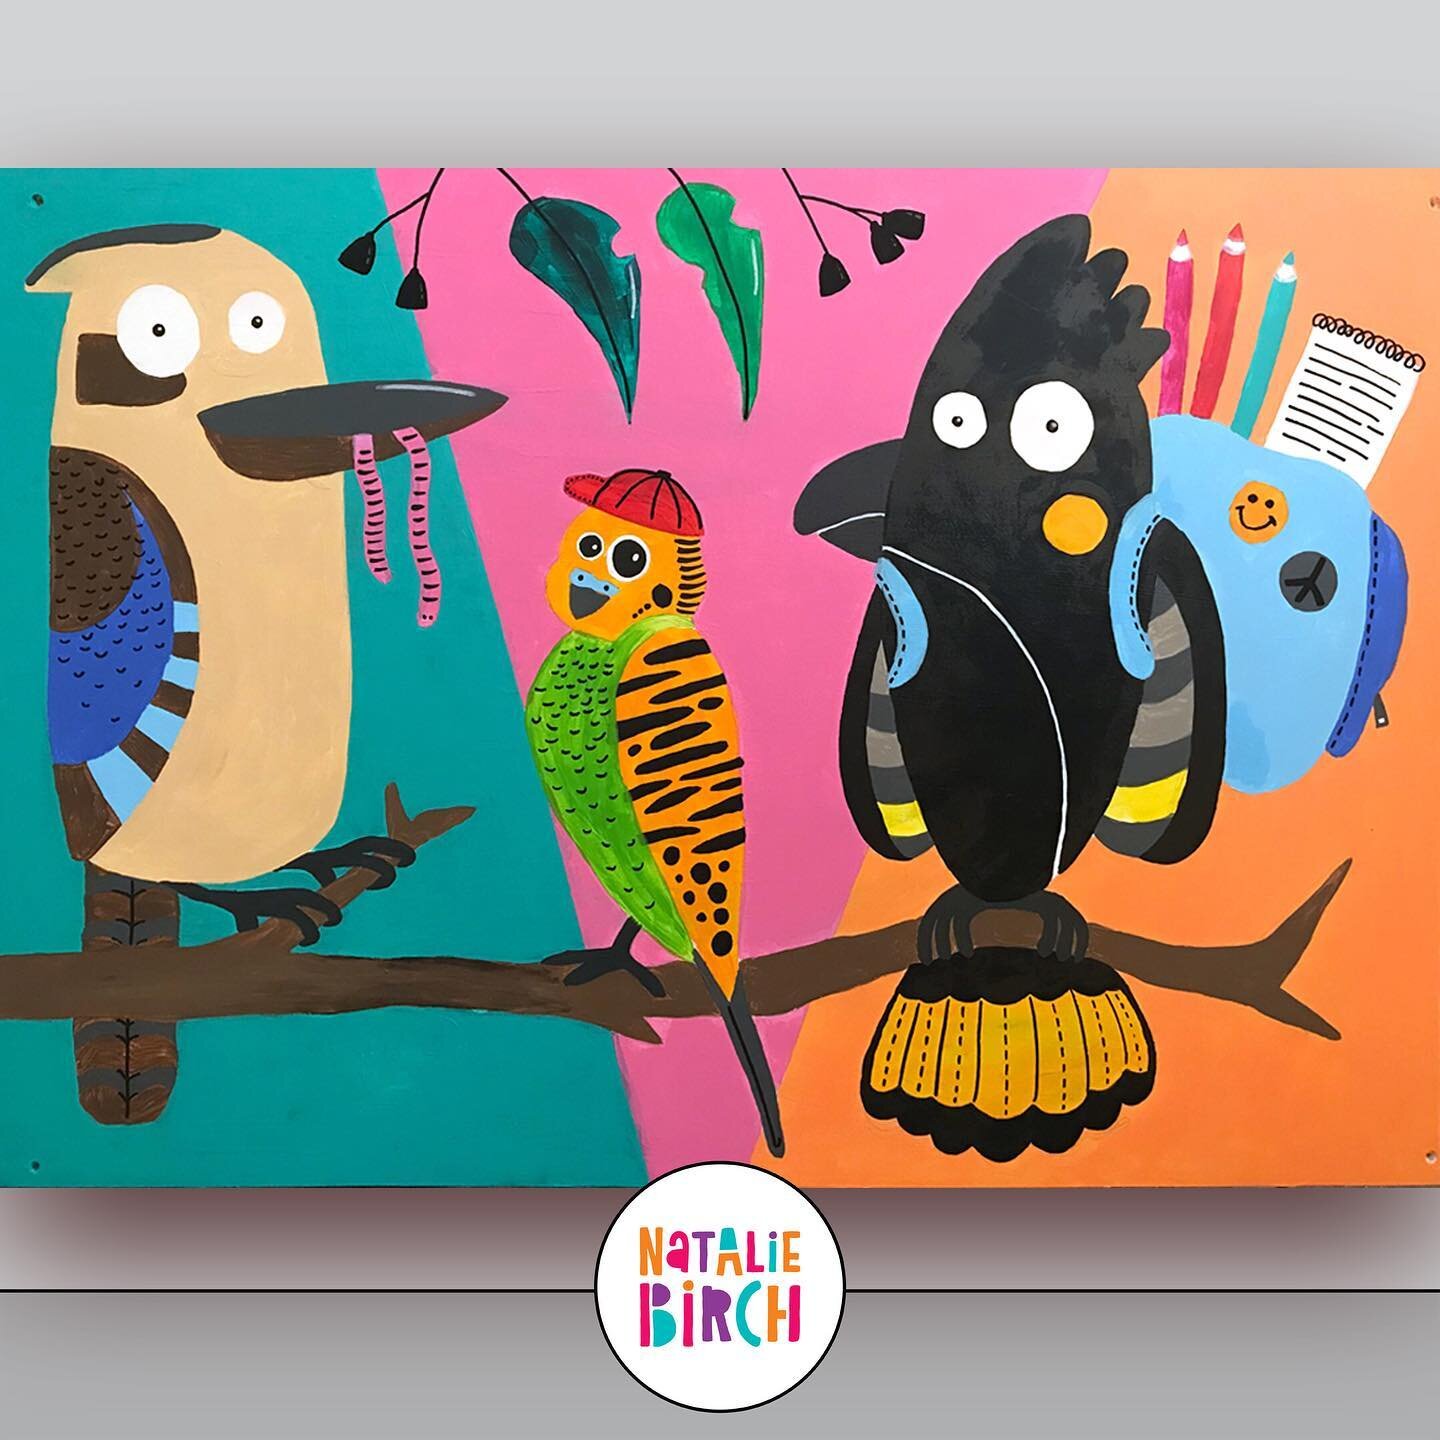 #australianbirds #triptych mural for the kids at Freedom Club Keysborough.
Panel 3/3.
Acrylic on timber.

#acrylicpainting #muralpainting #worldofcolour #paintingforkids #artforkids #cartoonbirds #kookaburra #budgie #blackcockatoo #illustration #kids